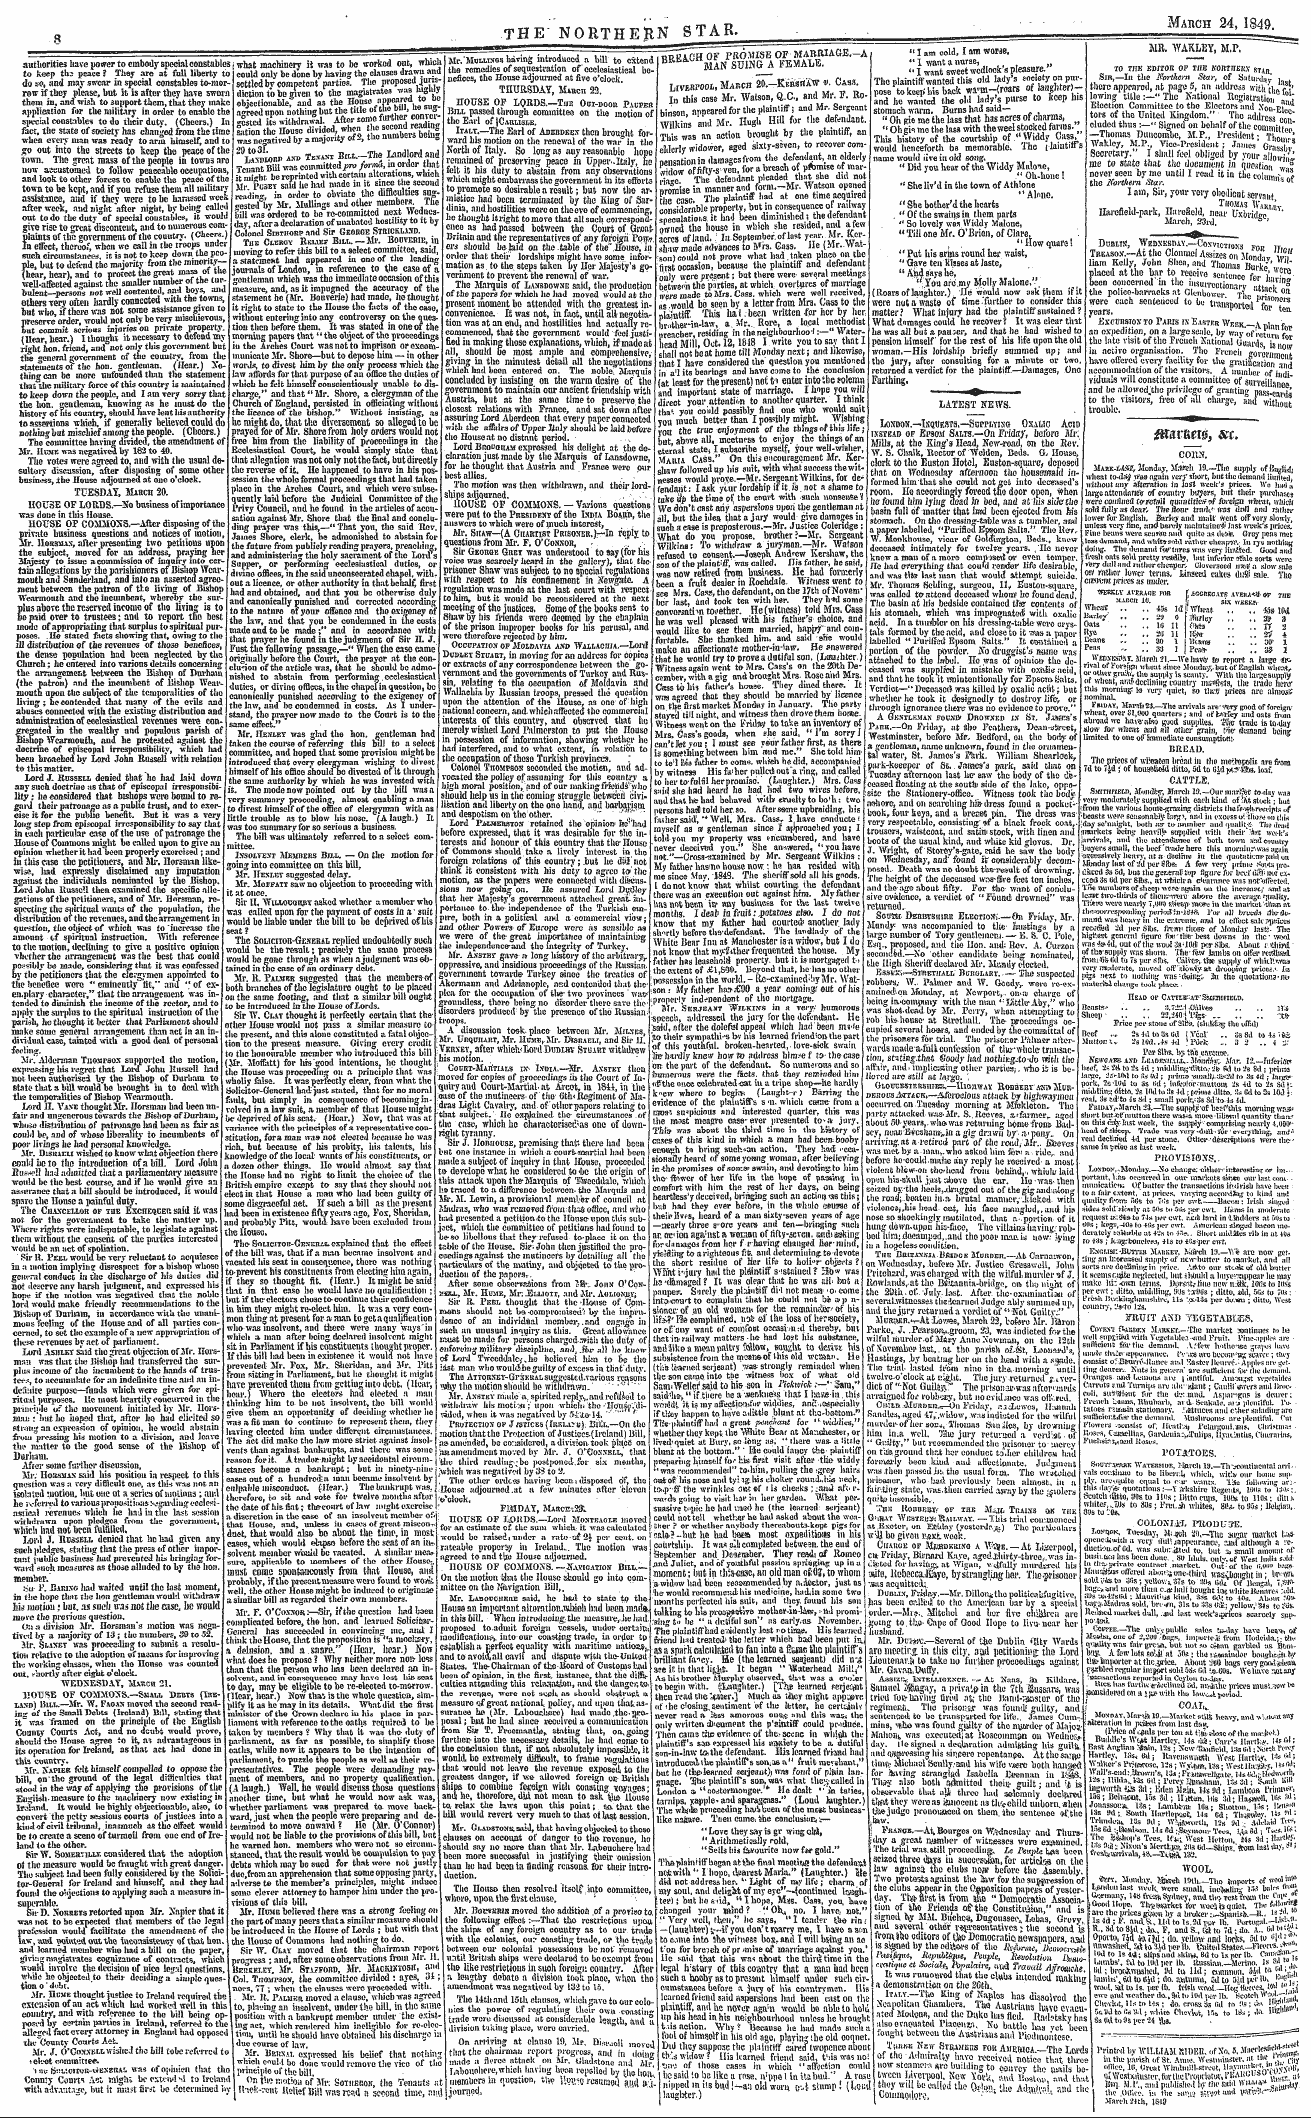 Northern Star (1837-1852): jS F Y, 3rd edition - Colln. Mabk-Ia.^, Slonduy, Jf't Feh 19.—...